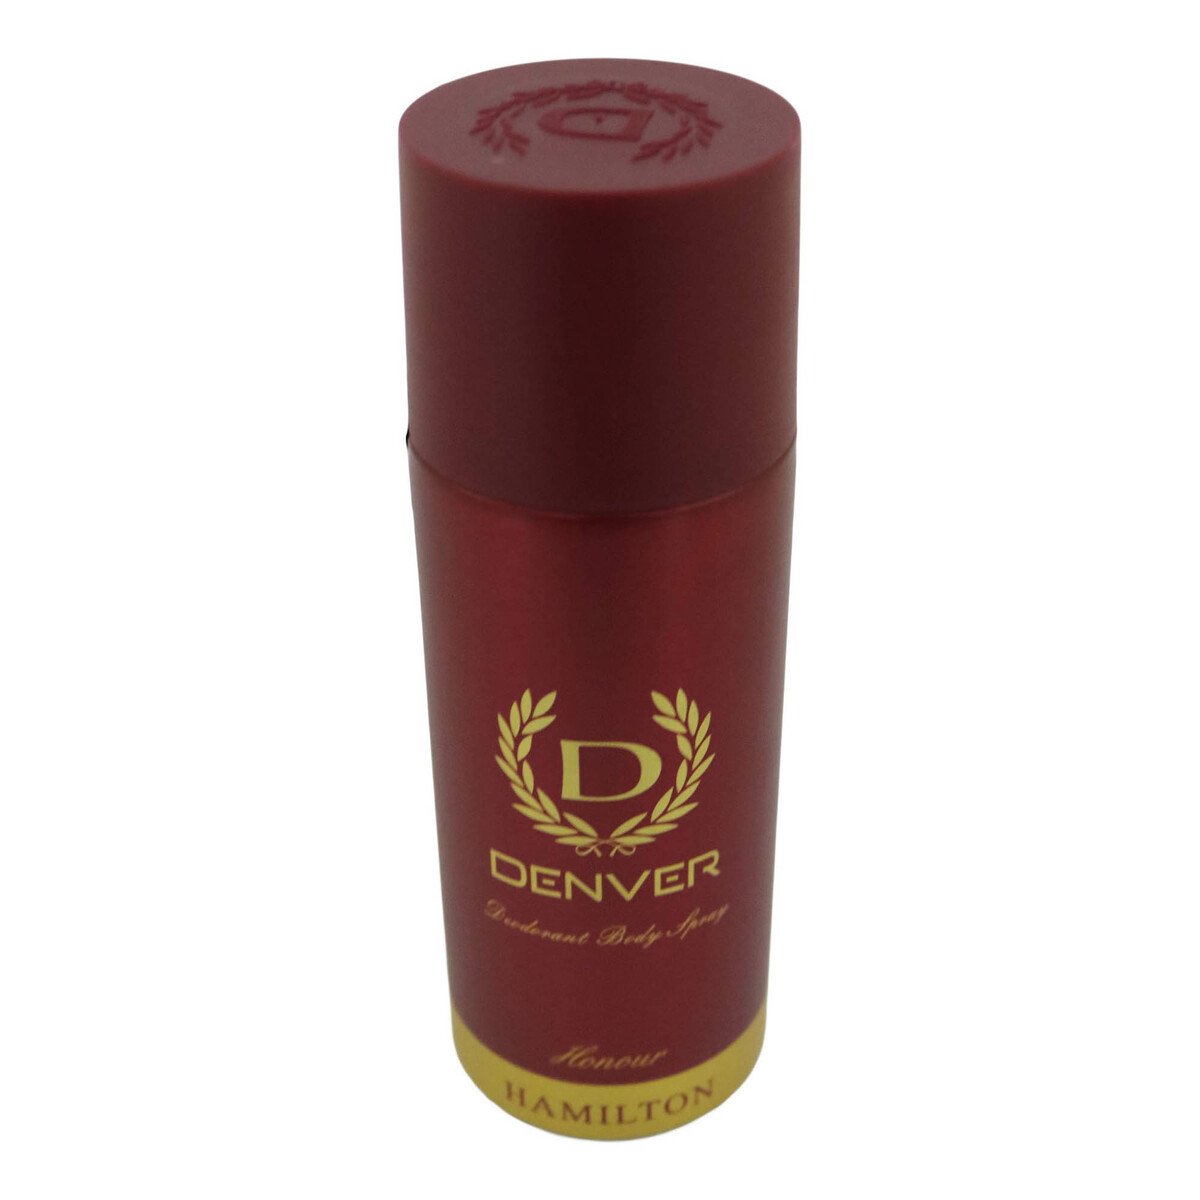 Denver Deodorant Spray Honour 165ml